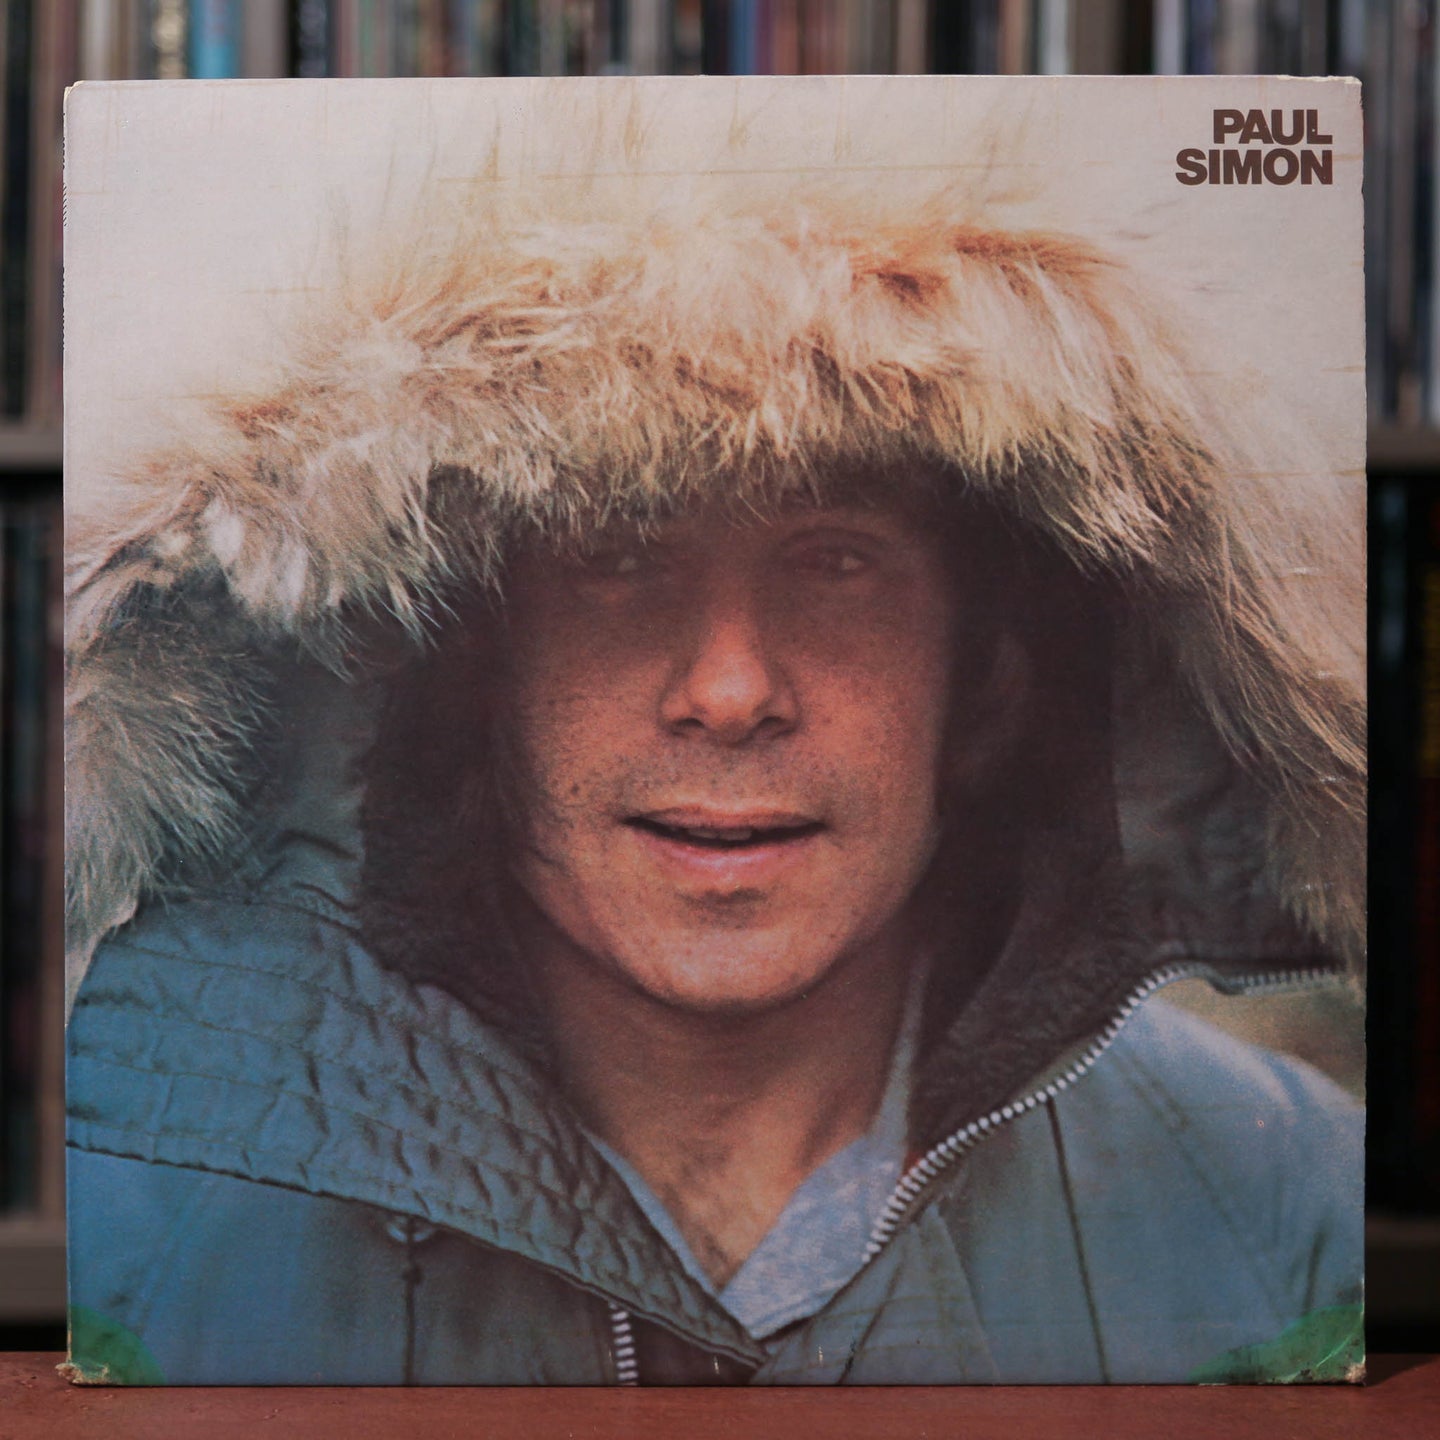 Paul Simon - Self-Titled - 1972 Columbia, VG+/EX